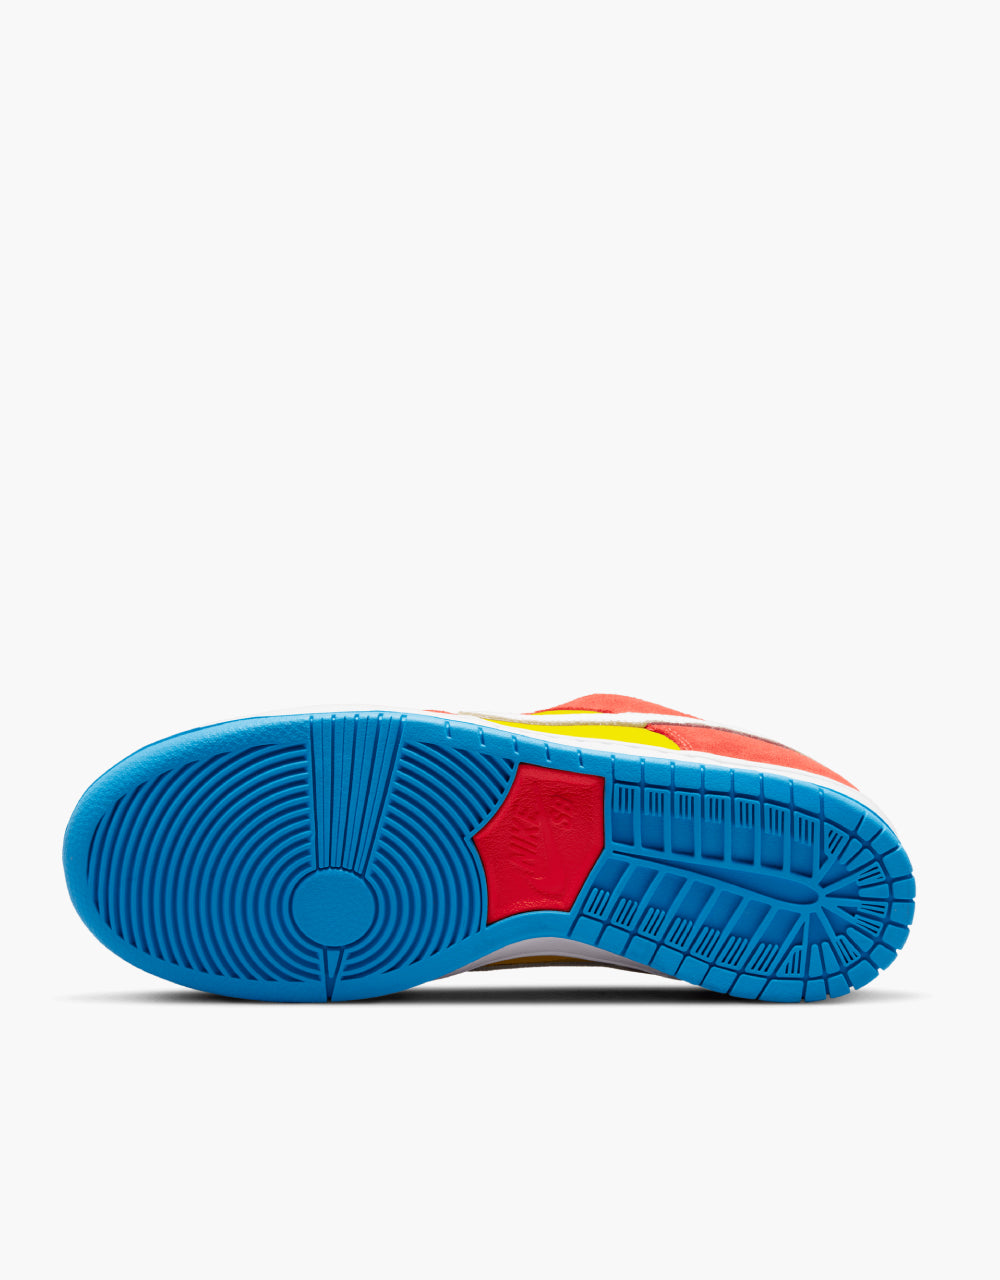 Nike SB 'Bart' Dunk Low Pro Skate Shoes - Habanero Red/White-Blue Hero